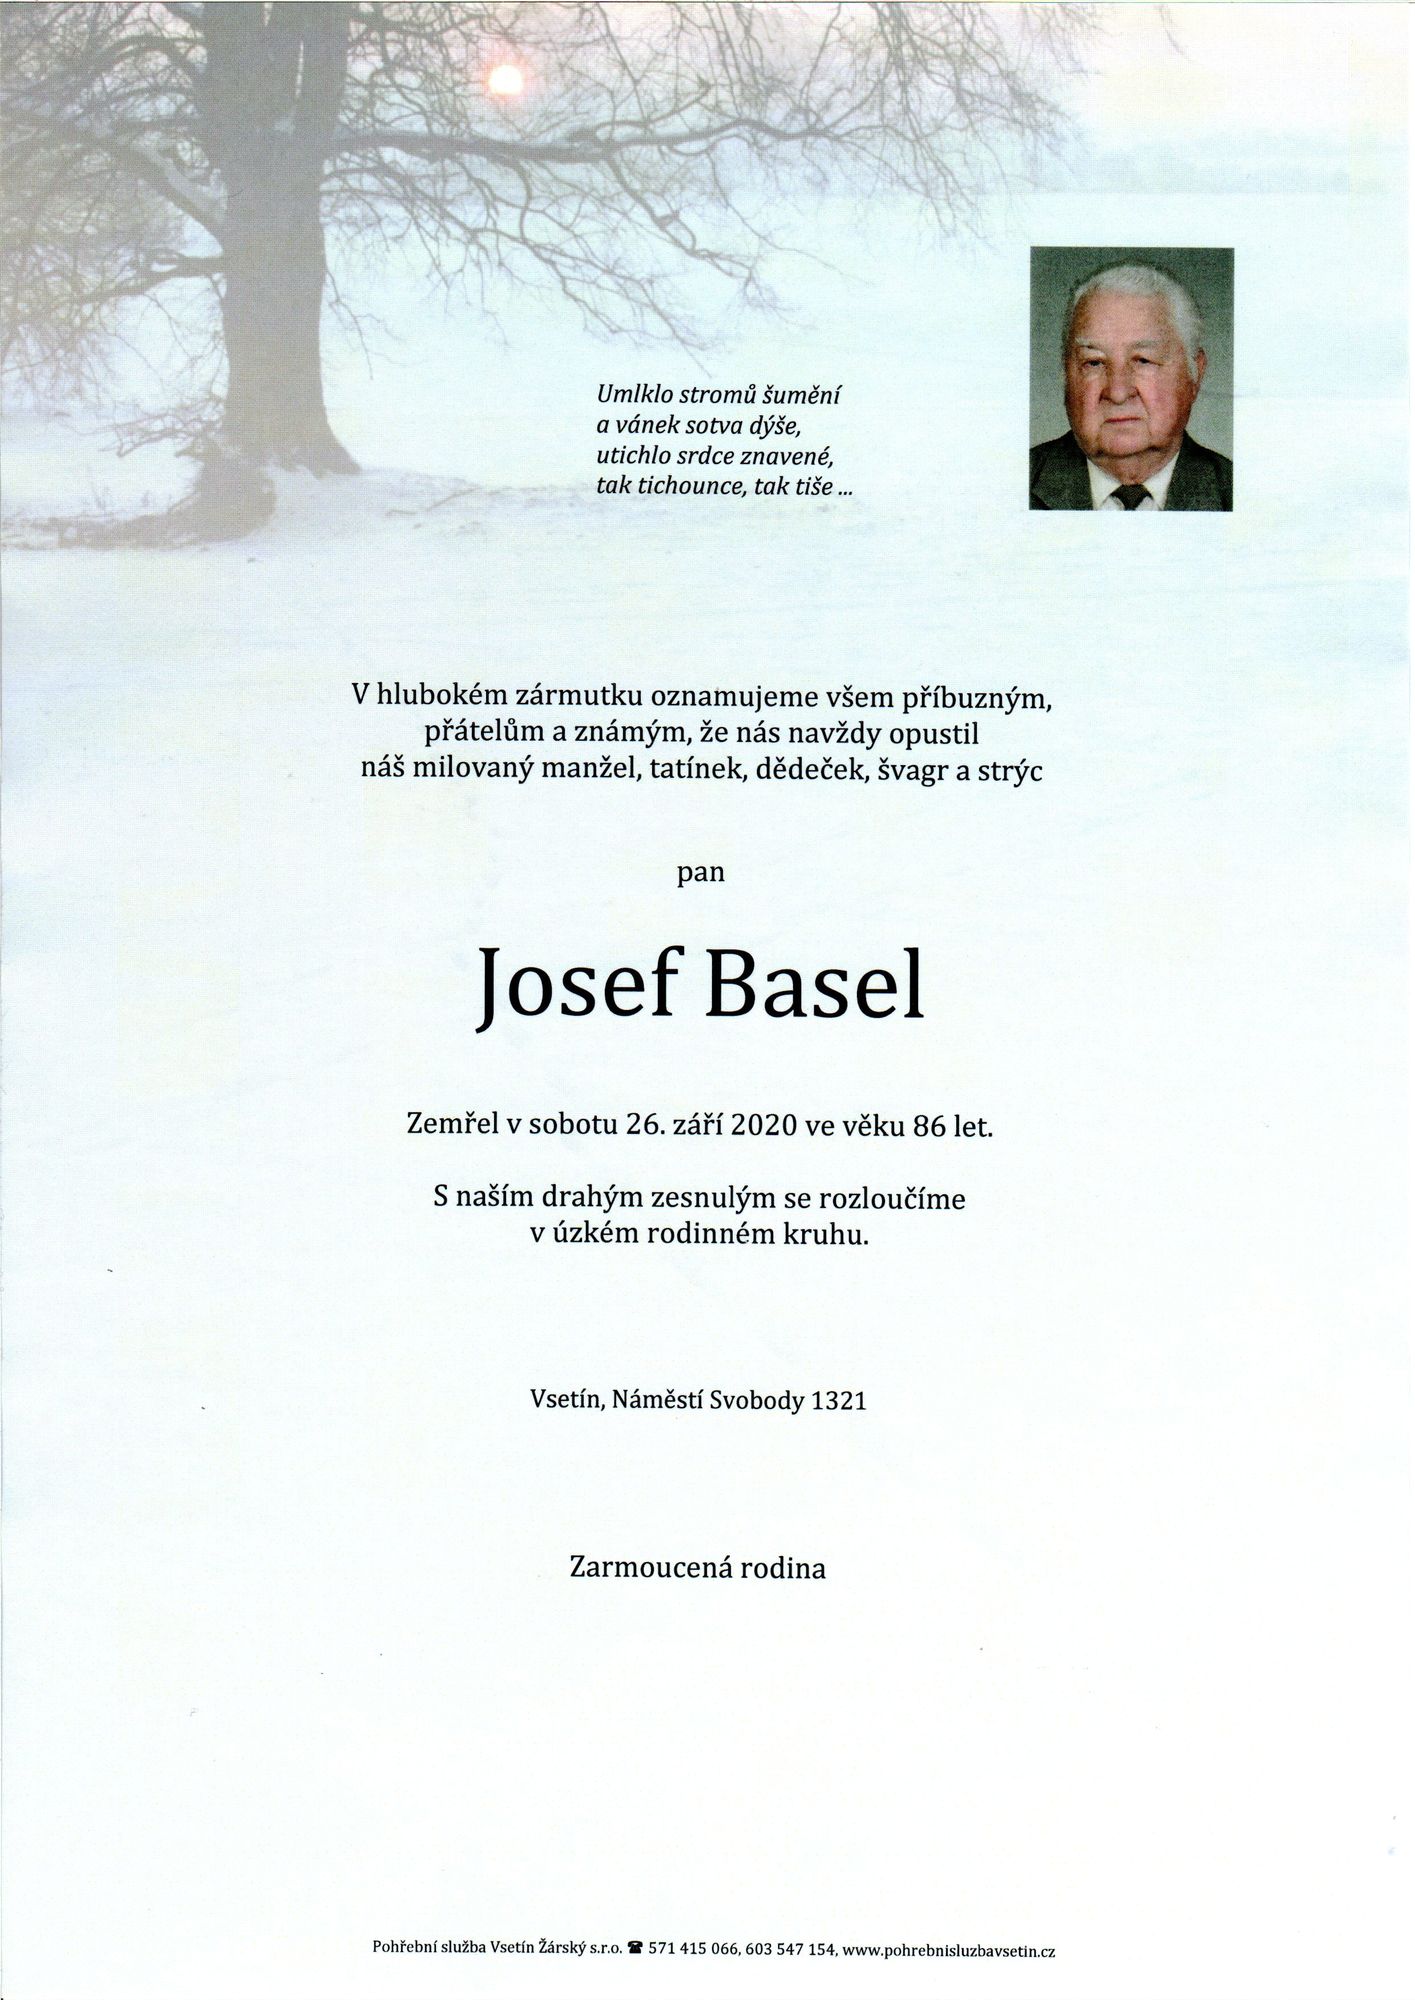 Josef Basel